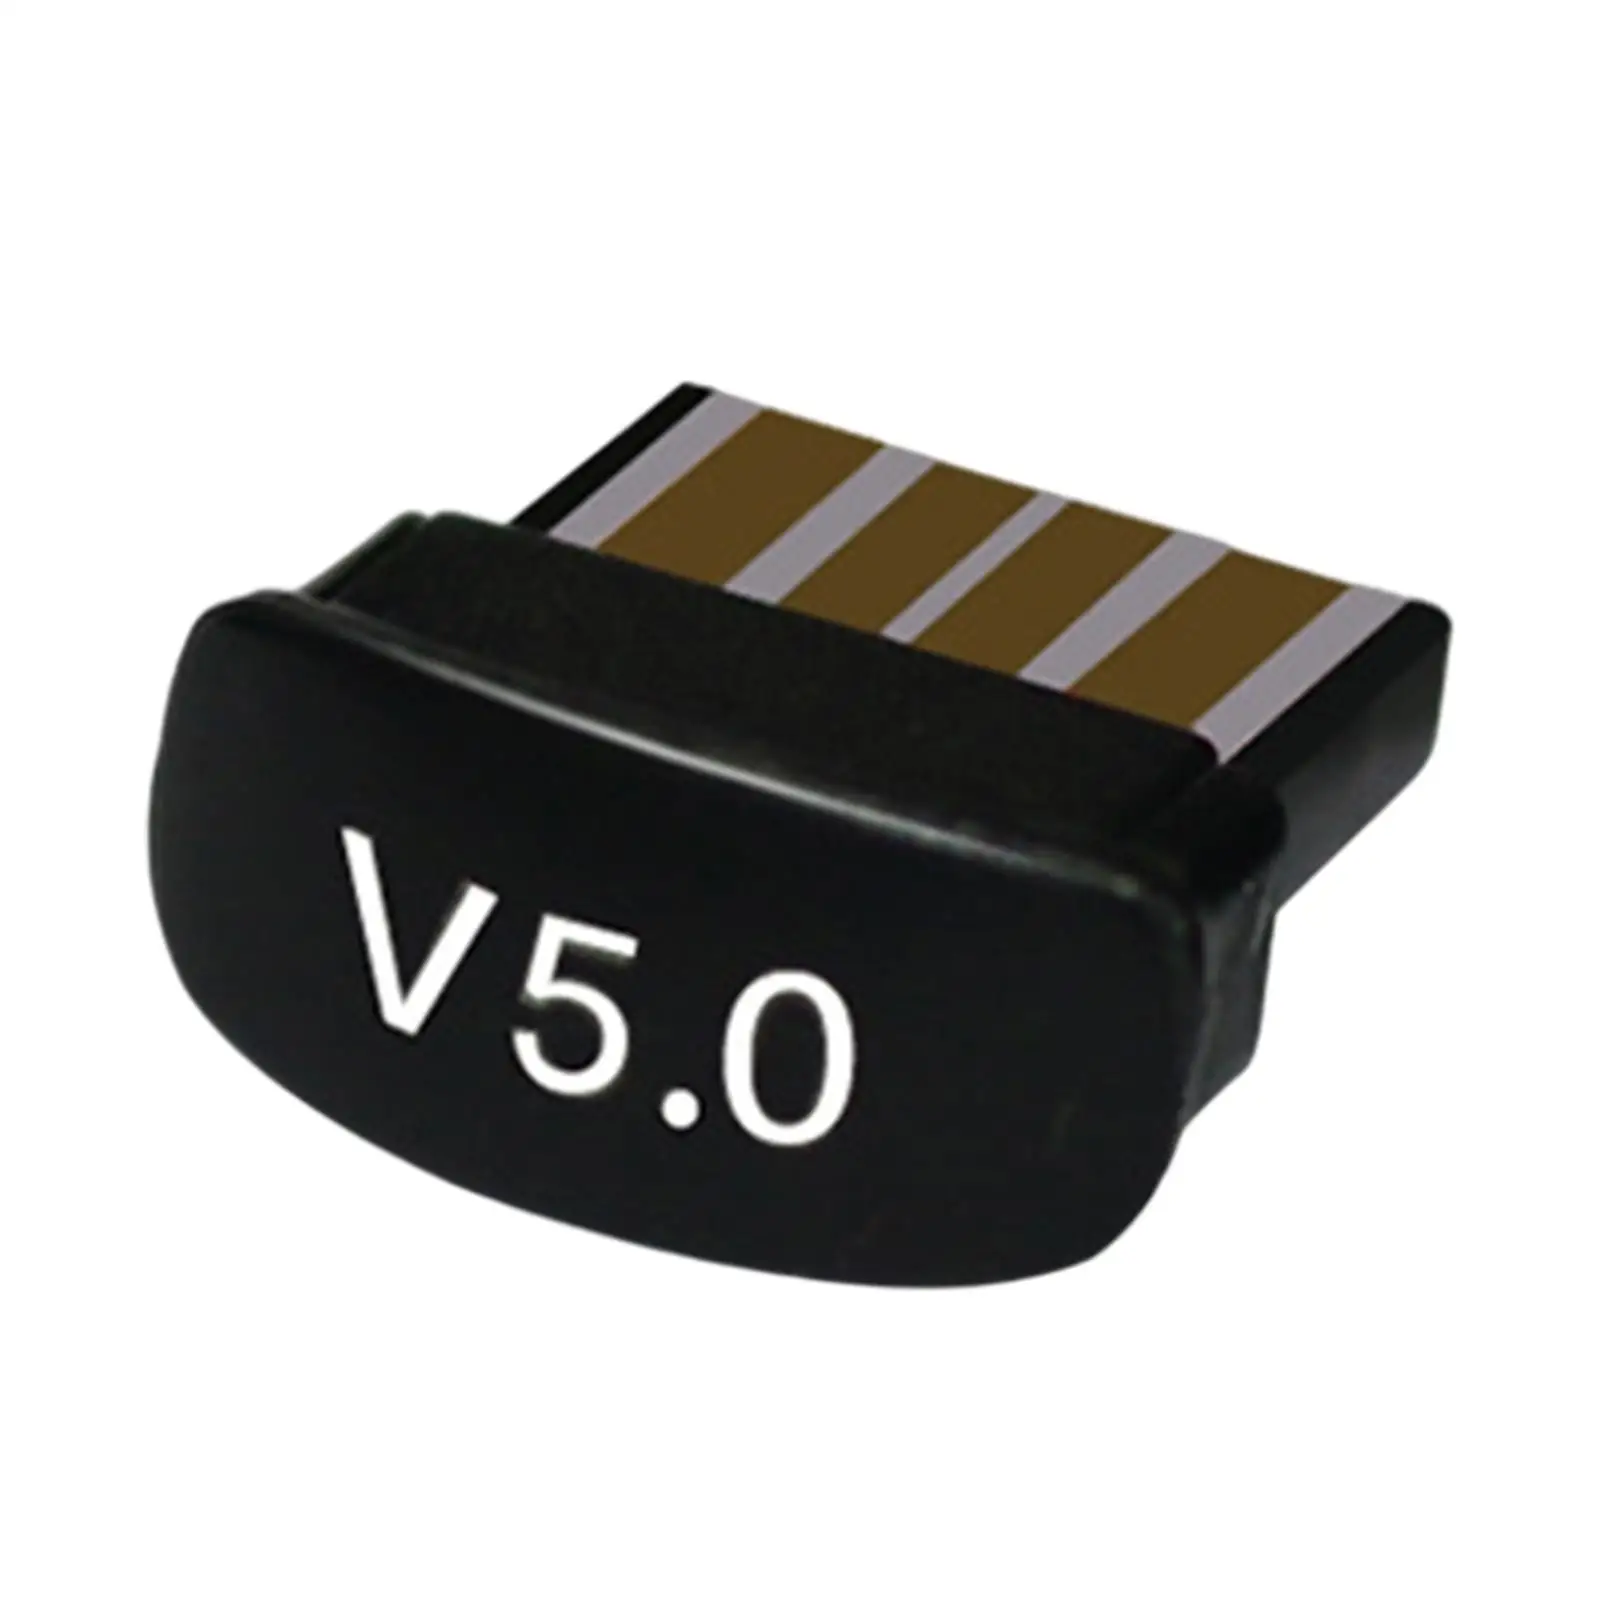 USB  5.0 Adapter, USB  ,   10, 8 ,7 Laptop Desktop to  Headphone, Speaker, Keyboard, Mouse